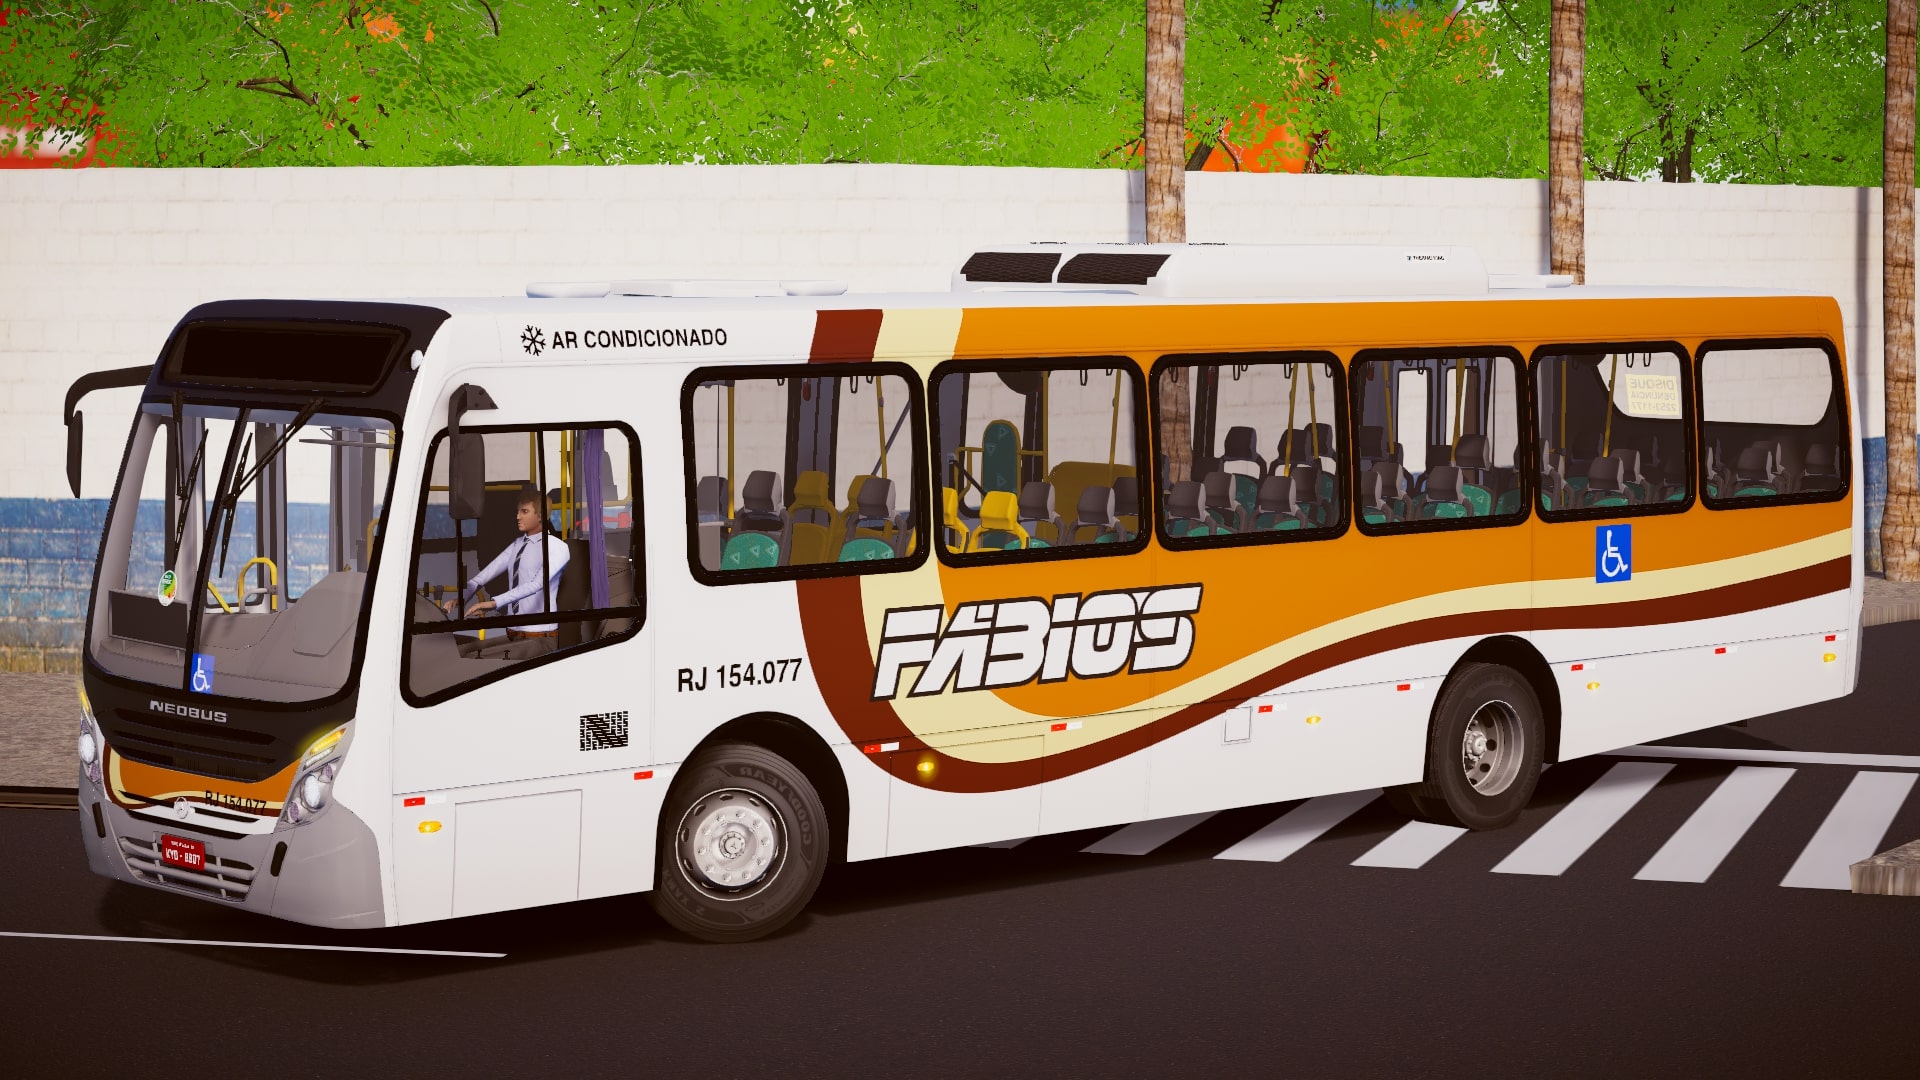 Proton Bus Simulator: setembro 2019